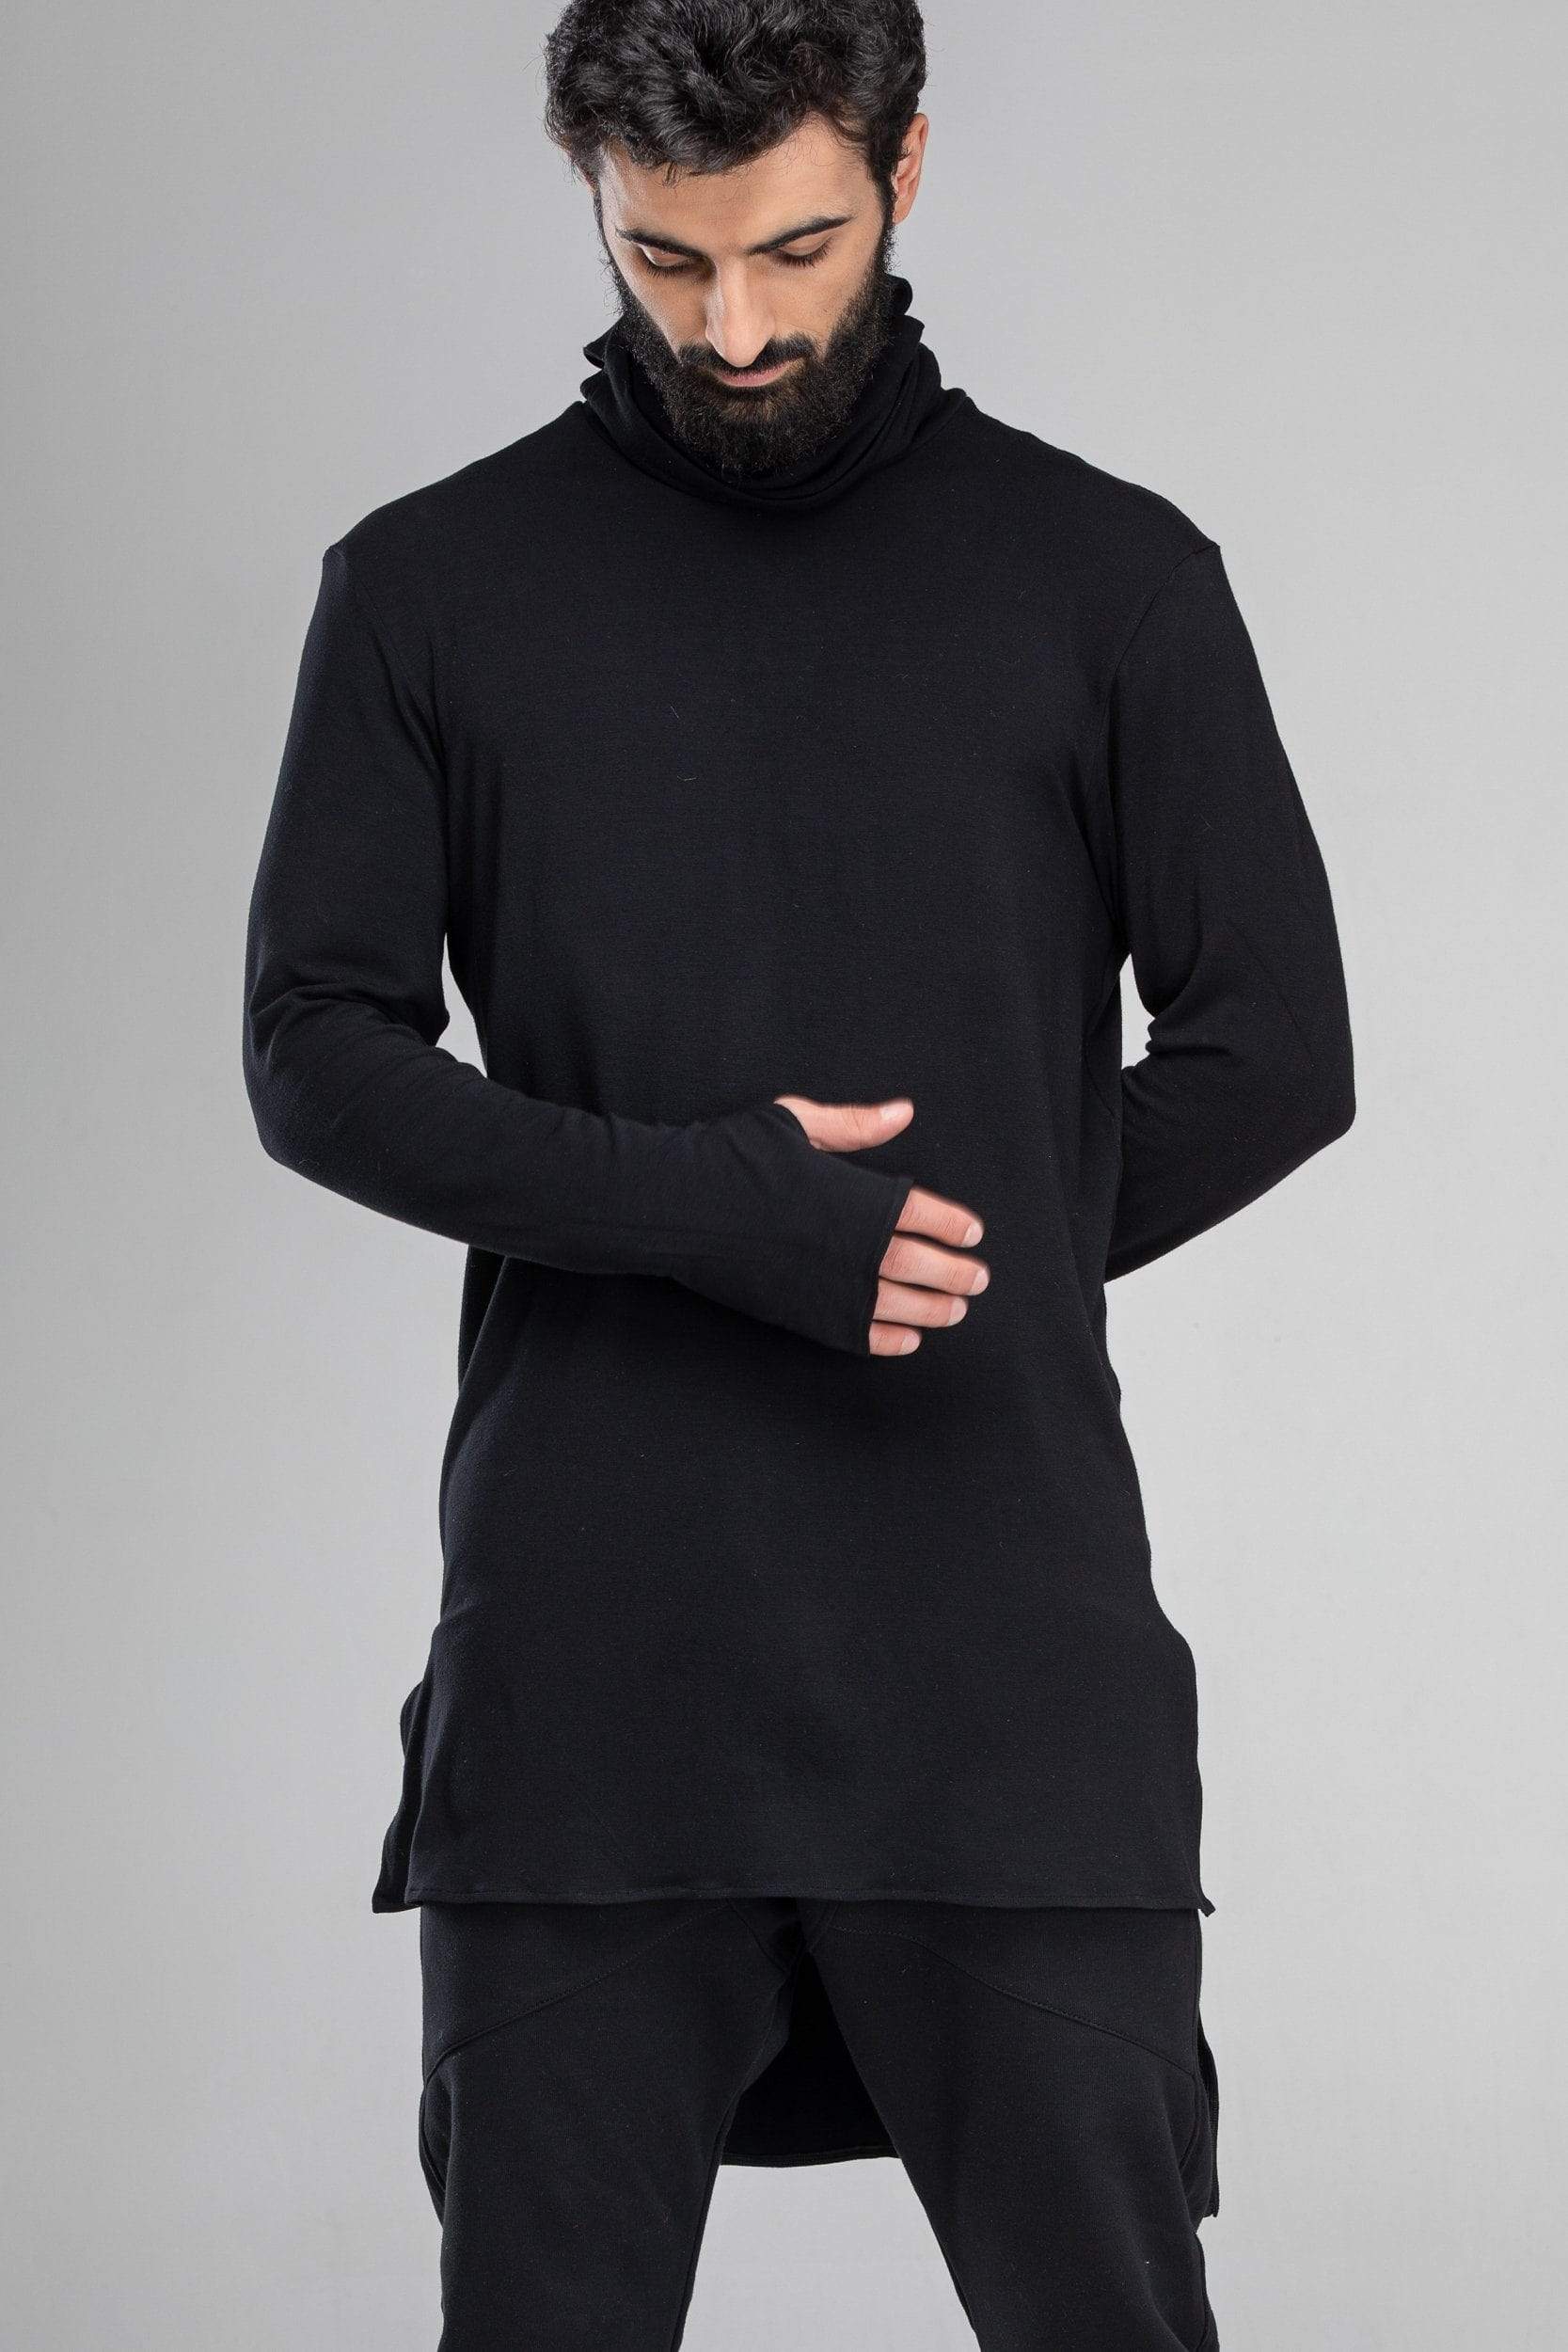 MDNT45 Tops & T-shirts Black turtleneck sweater